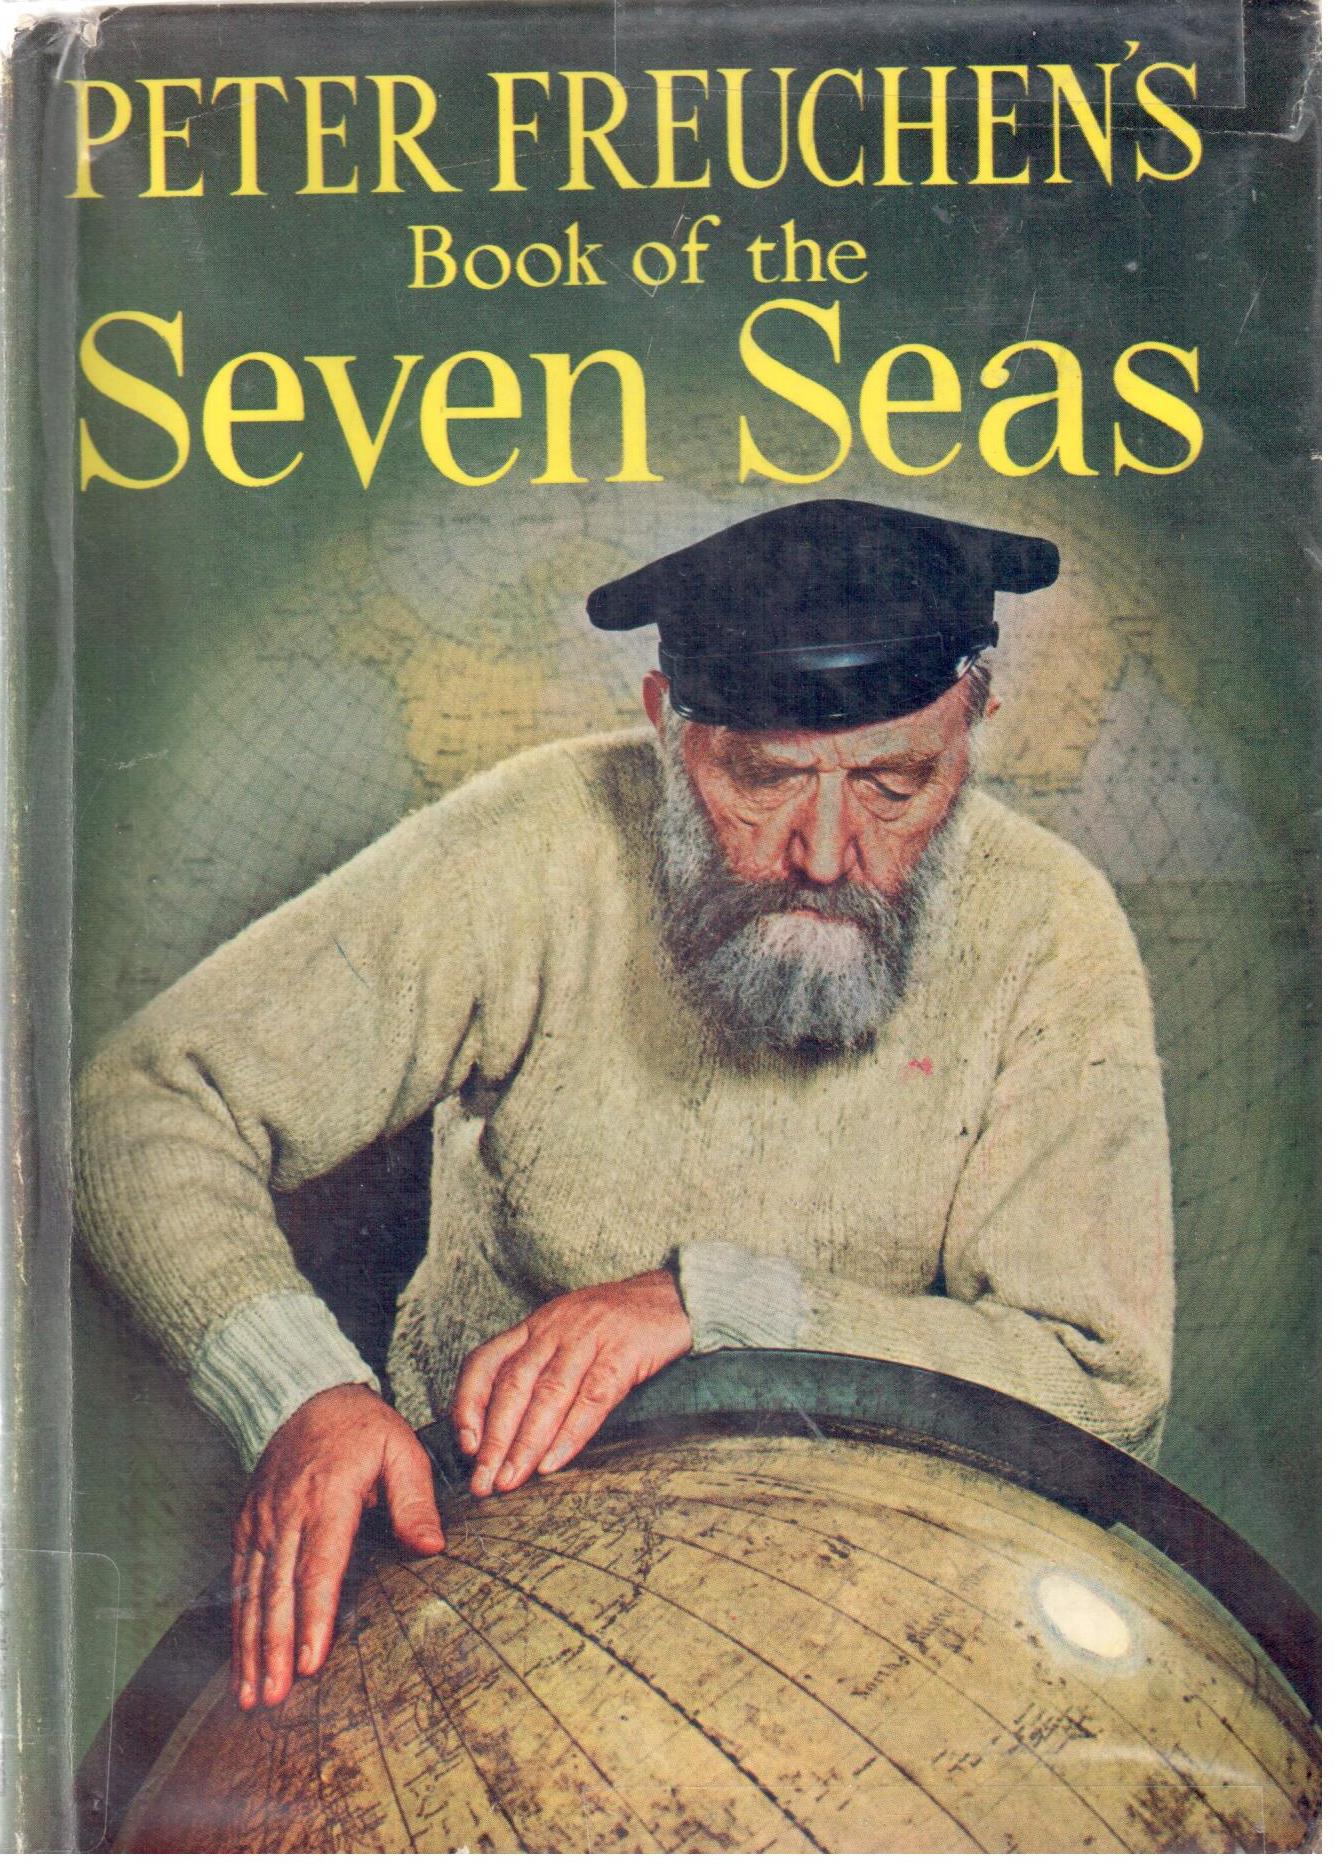 Peter Freuchen's book of the seven seas